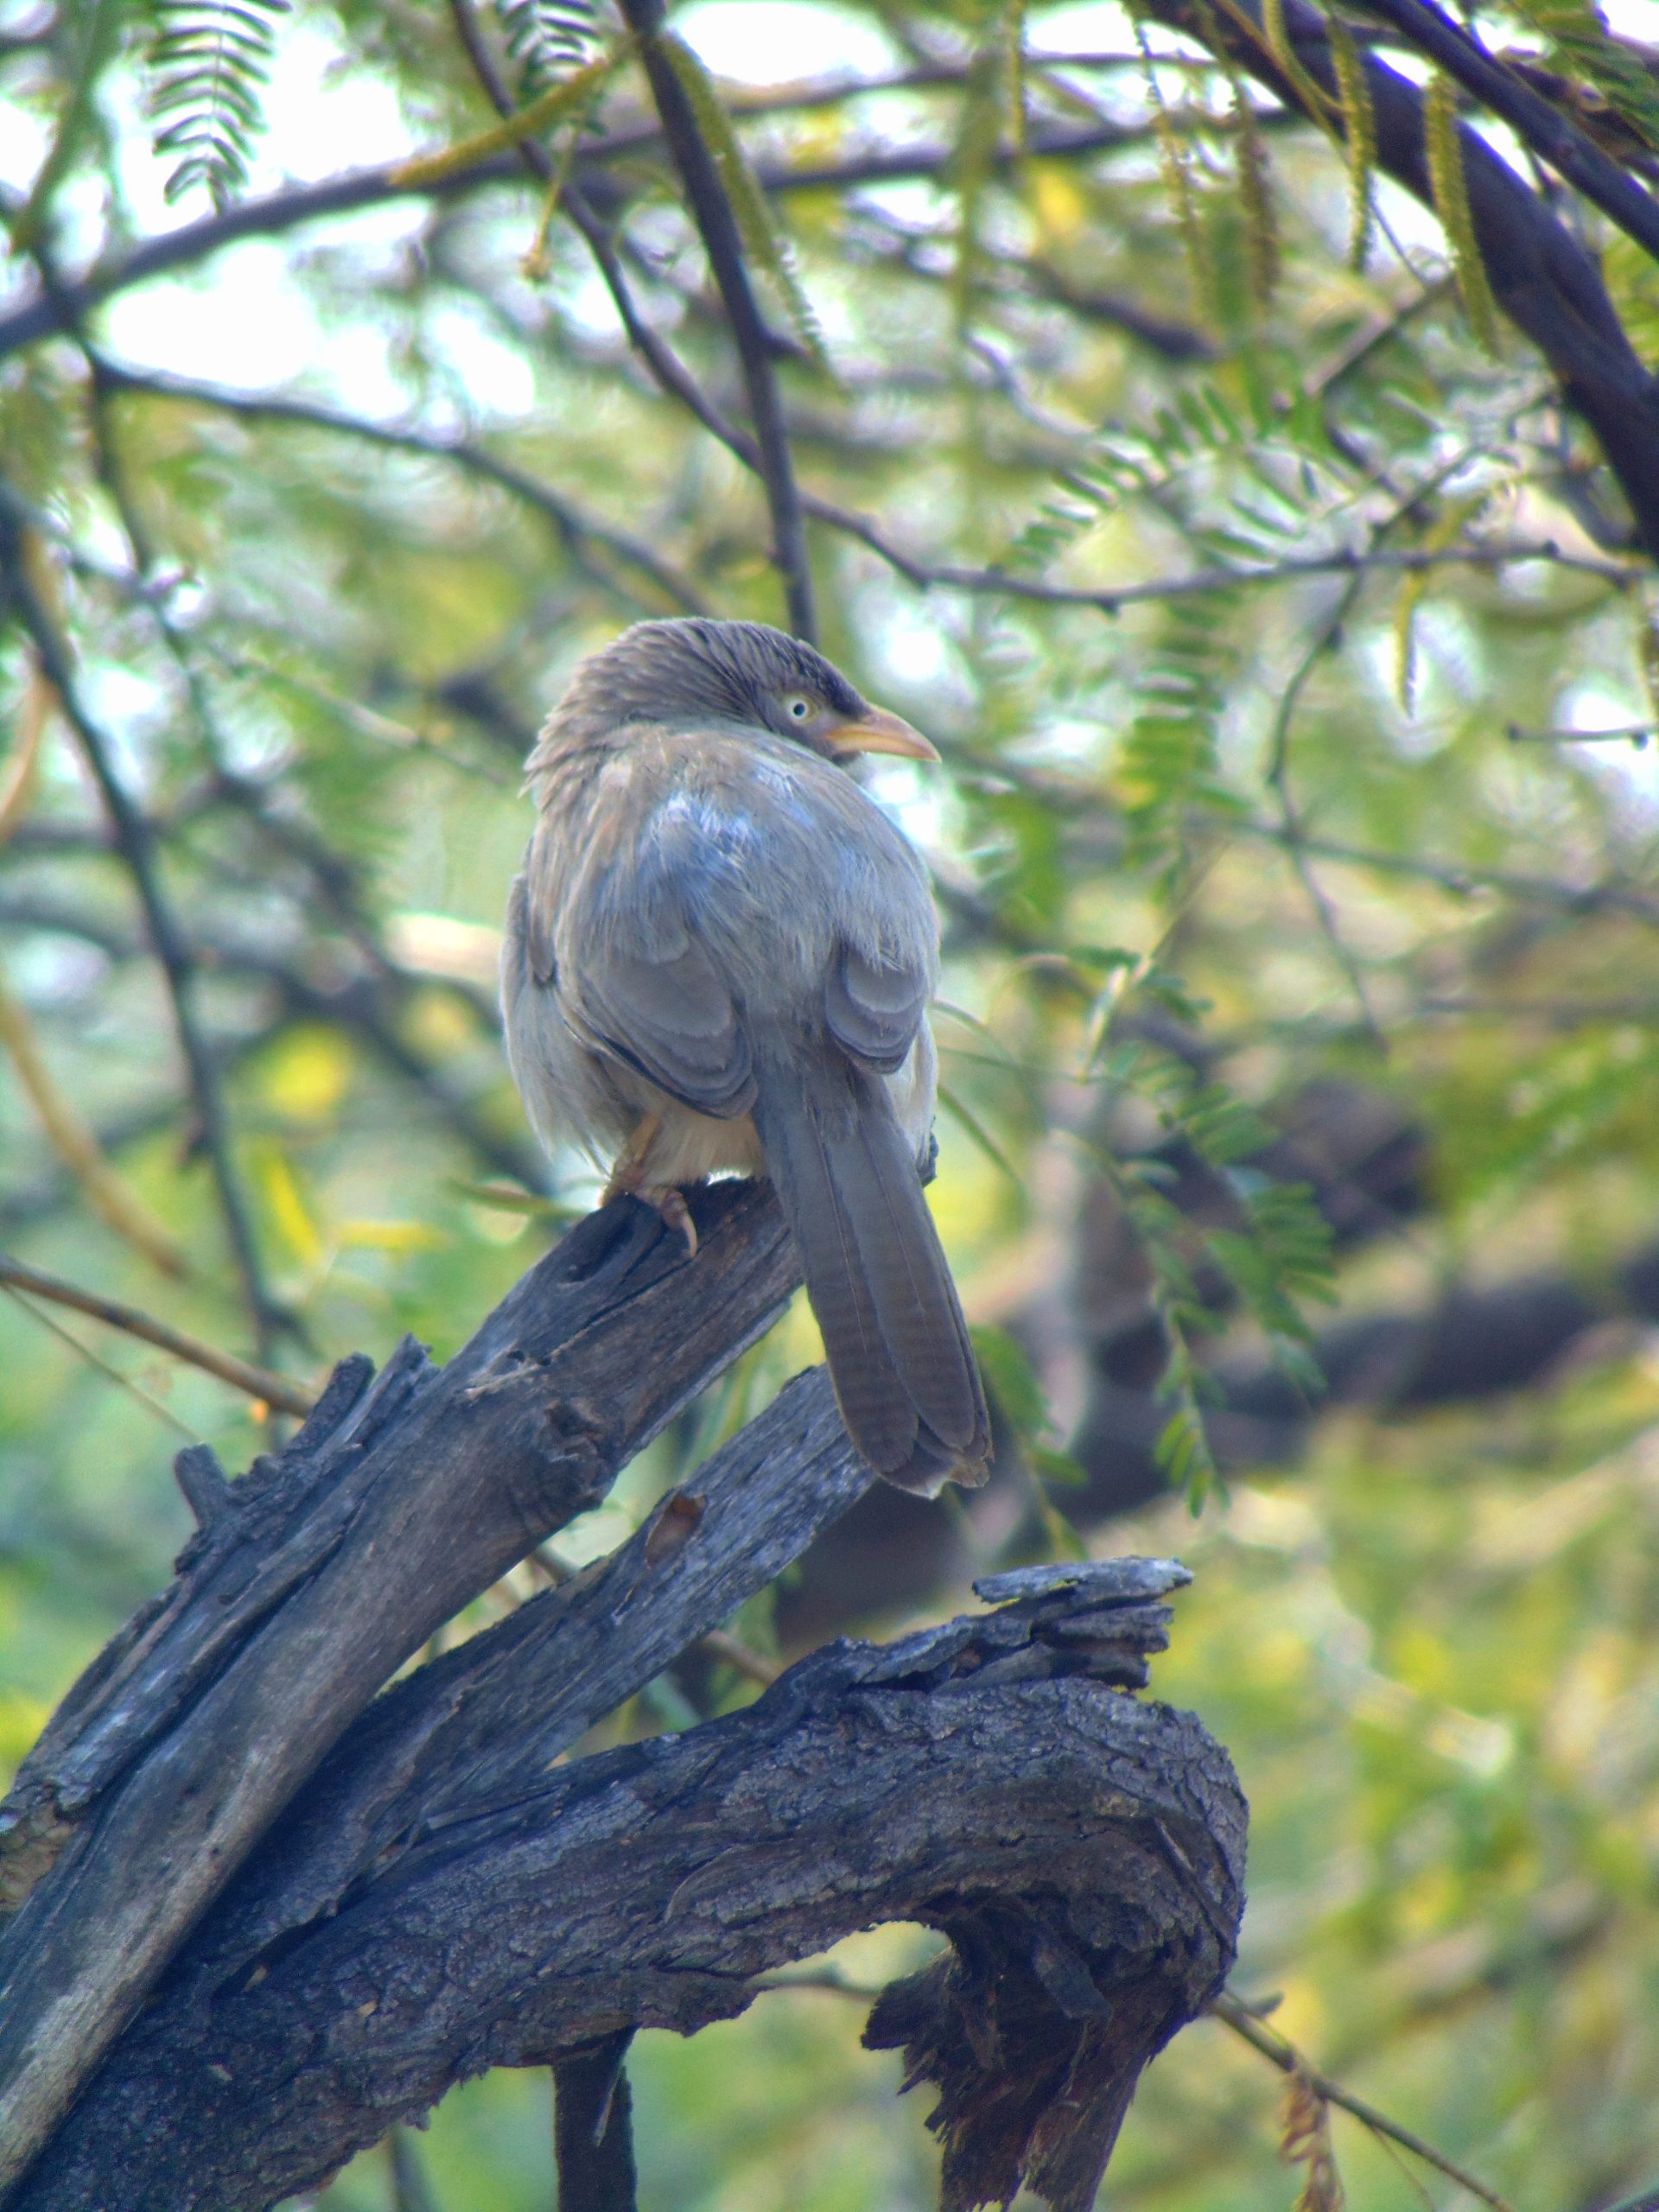 A bird sitting on dry wood